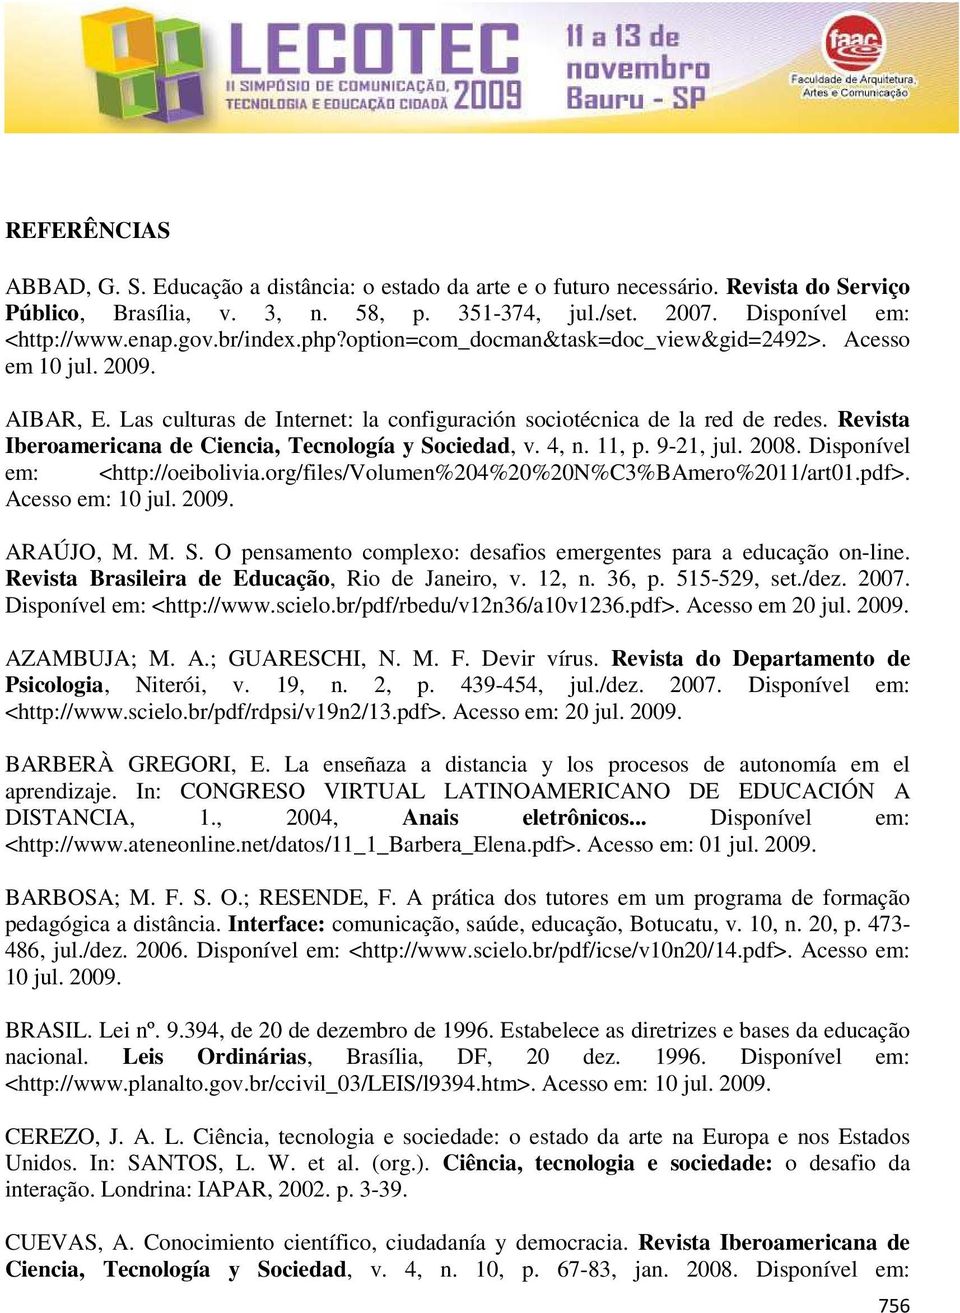 Revista Iberoamericana de Ciencia, Tecnología y Sociedad, v. 4, n. 11, p. 9-21, jul. 2008. Disponível em: <http://oeibolivia.org/files/volumen%204%20%20n%c3%bamero%2011/art01.pdf>. Acesso em: 10 jul.